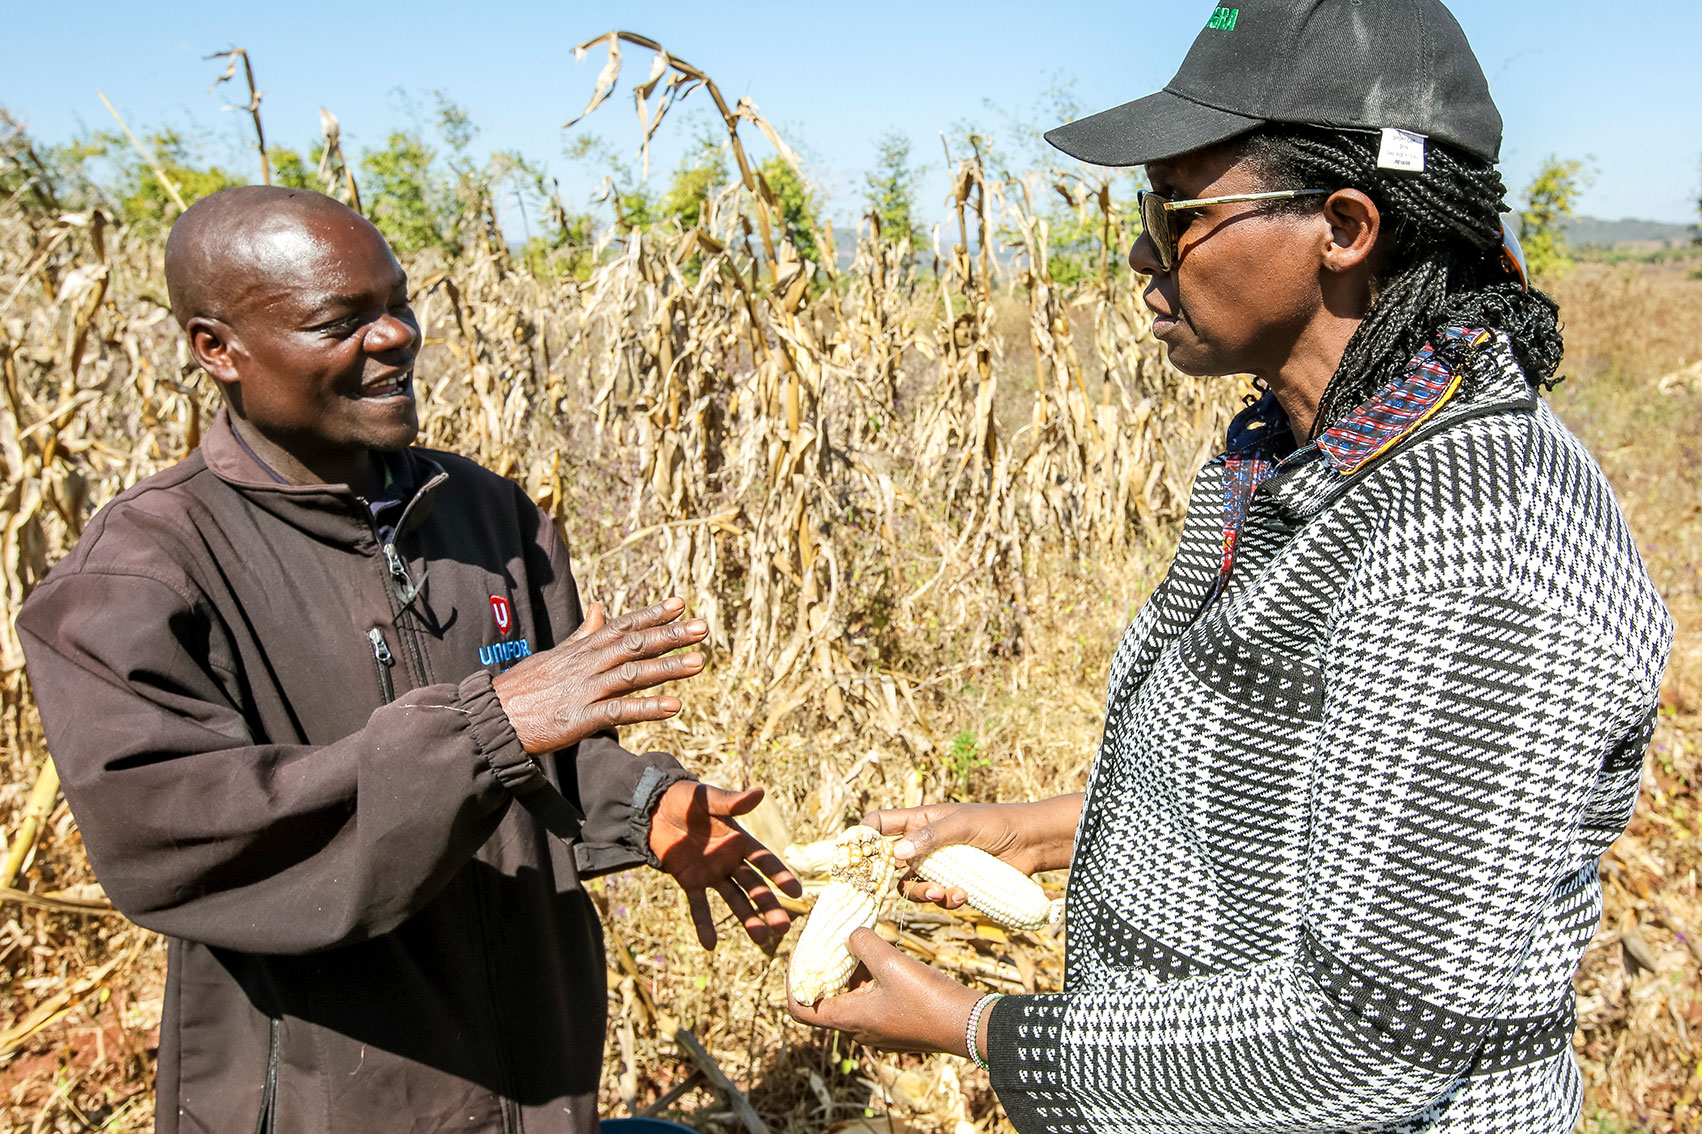 Dr. Kalibata speaking with a farmer in an open field of corn.